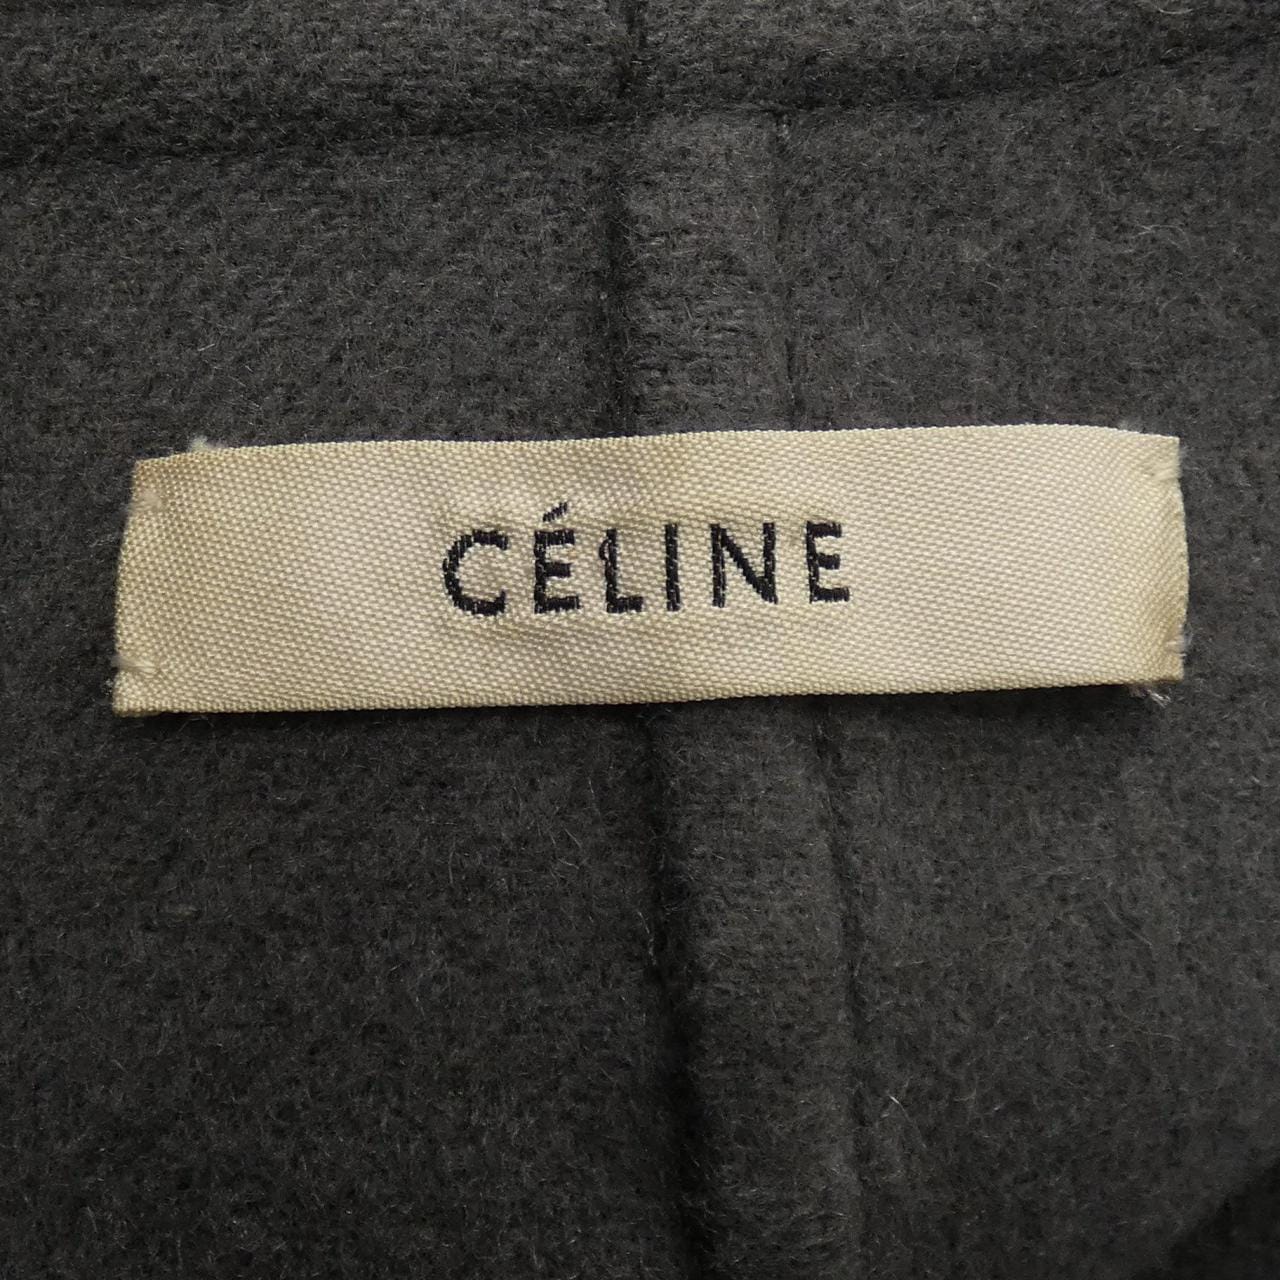 CELINE celine coat